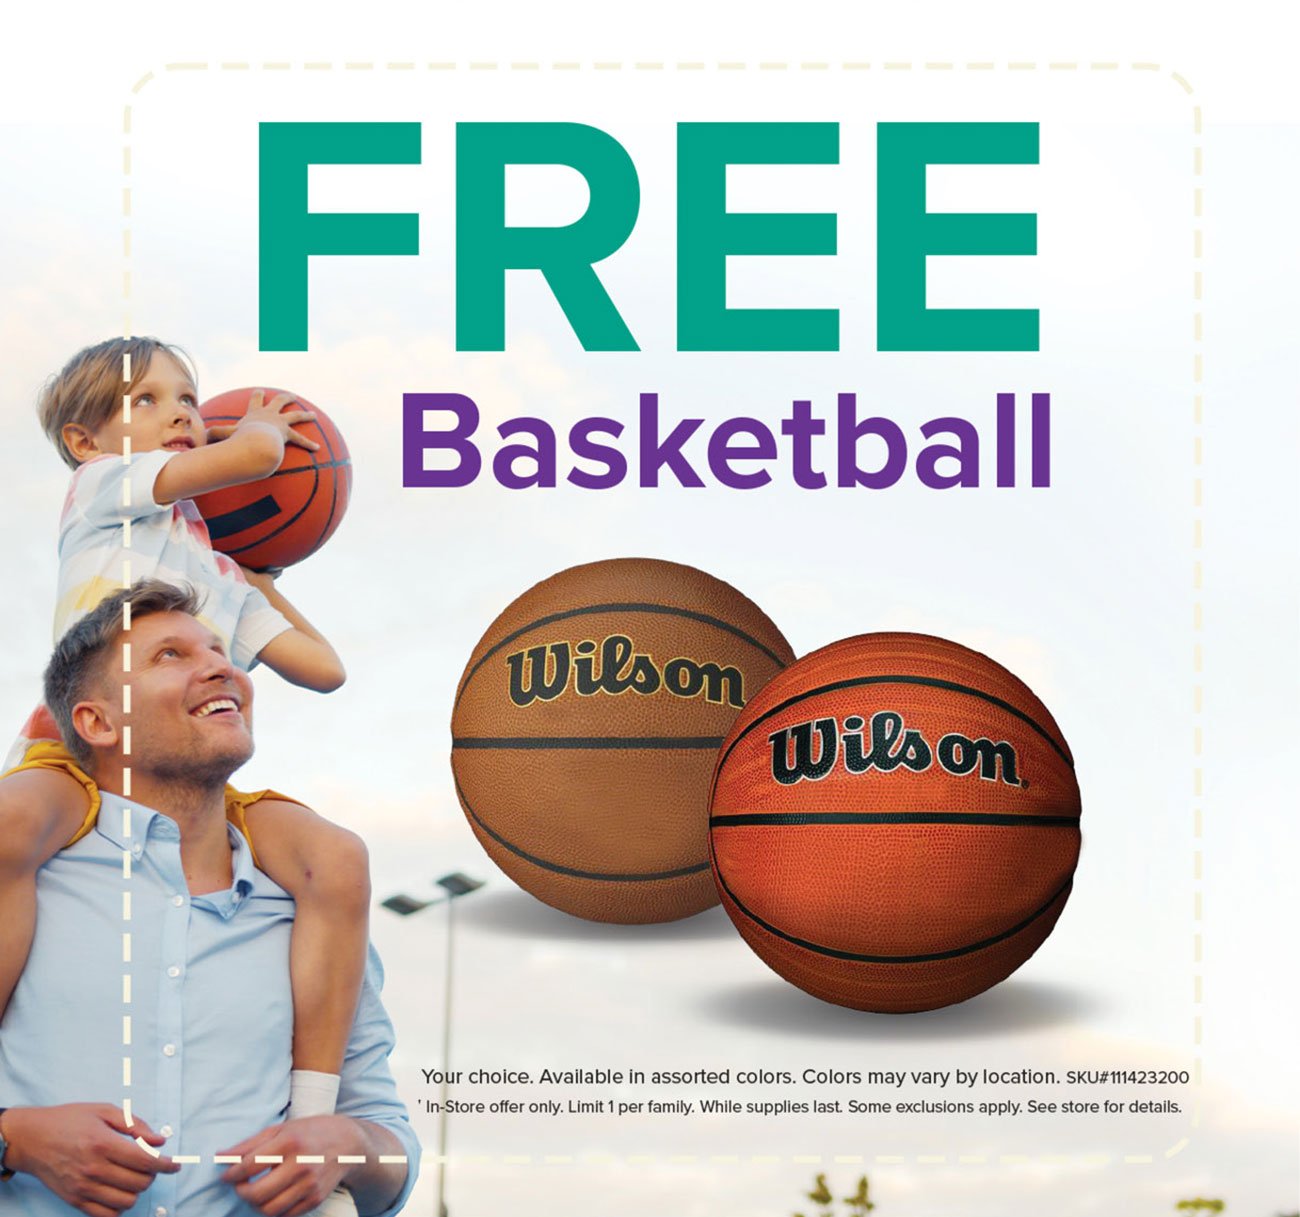 Free-basketball